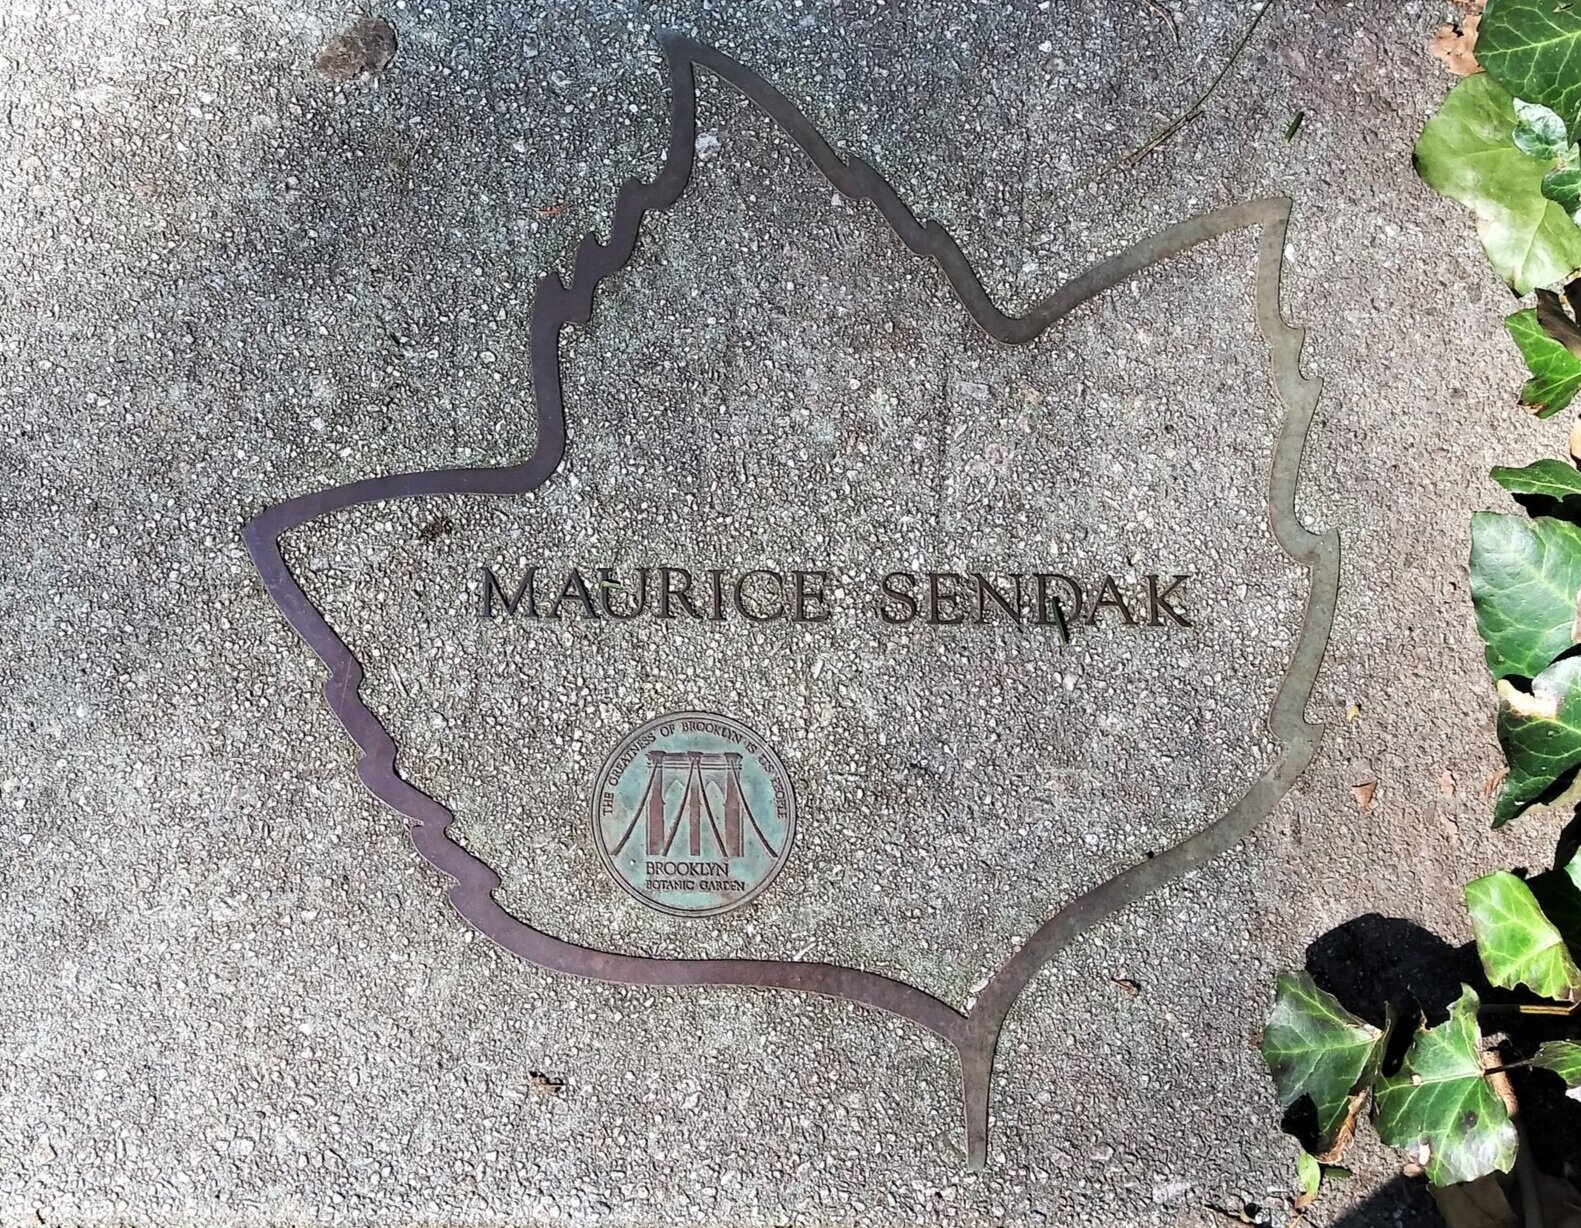 Maurice+Sendak.jpg